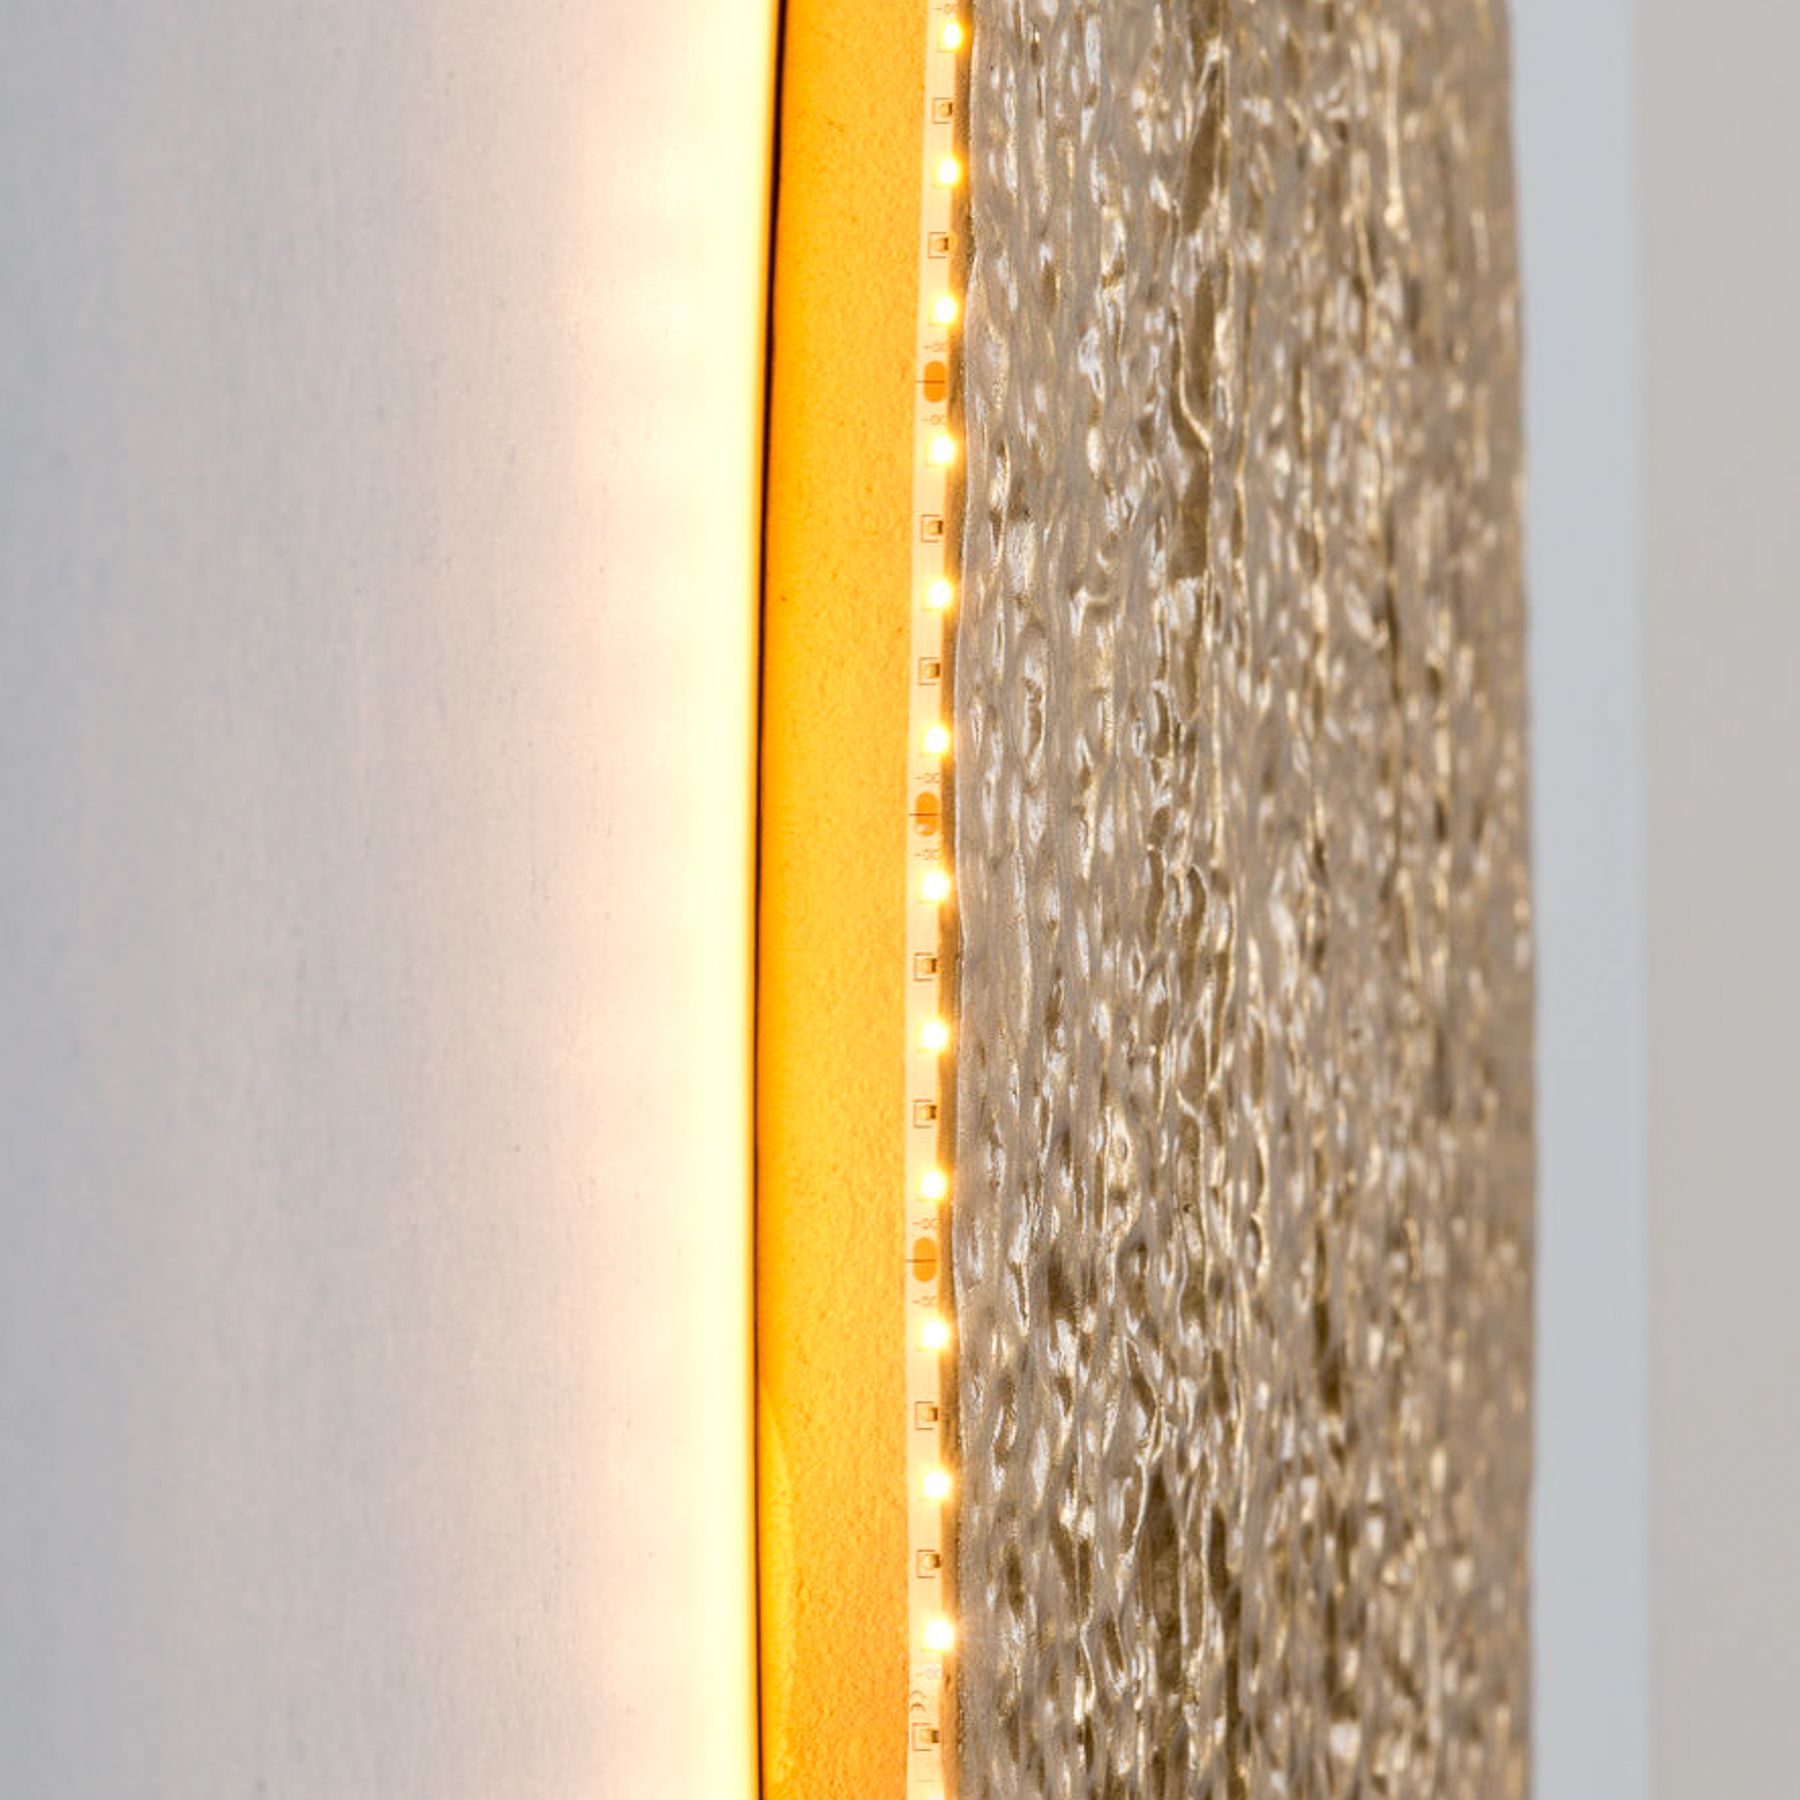 LED sienas lampa Meteor, zelta krāsā, Ø 100 cm, dzelzs